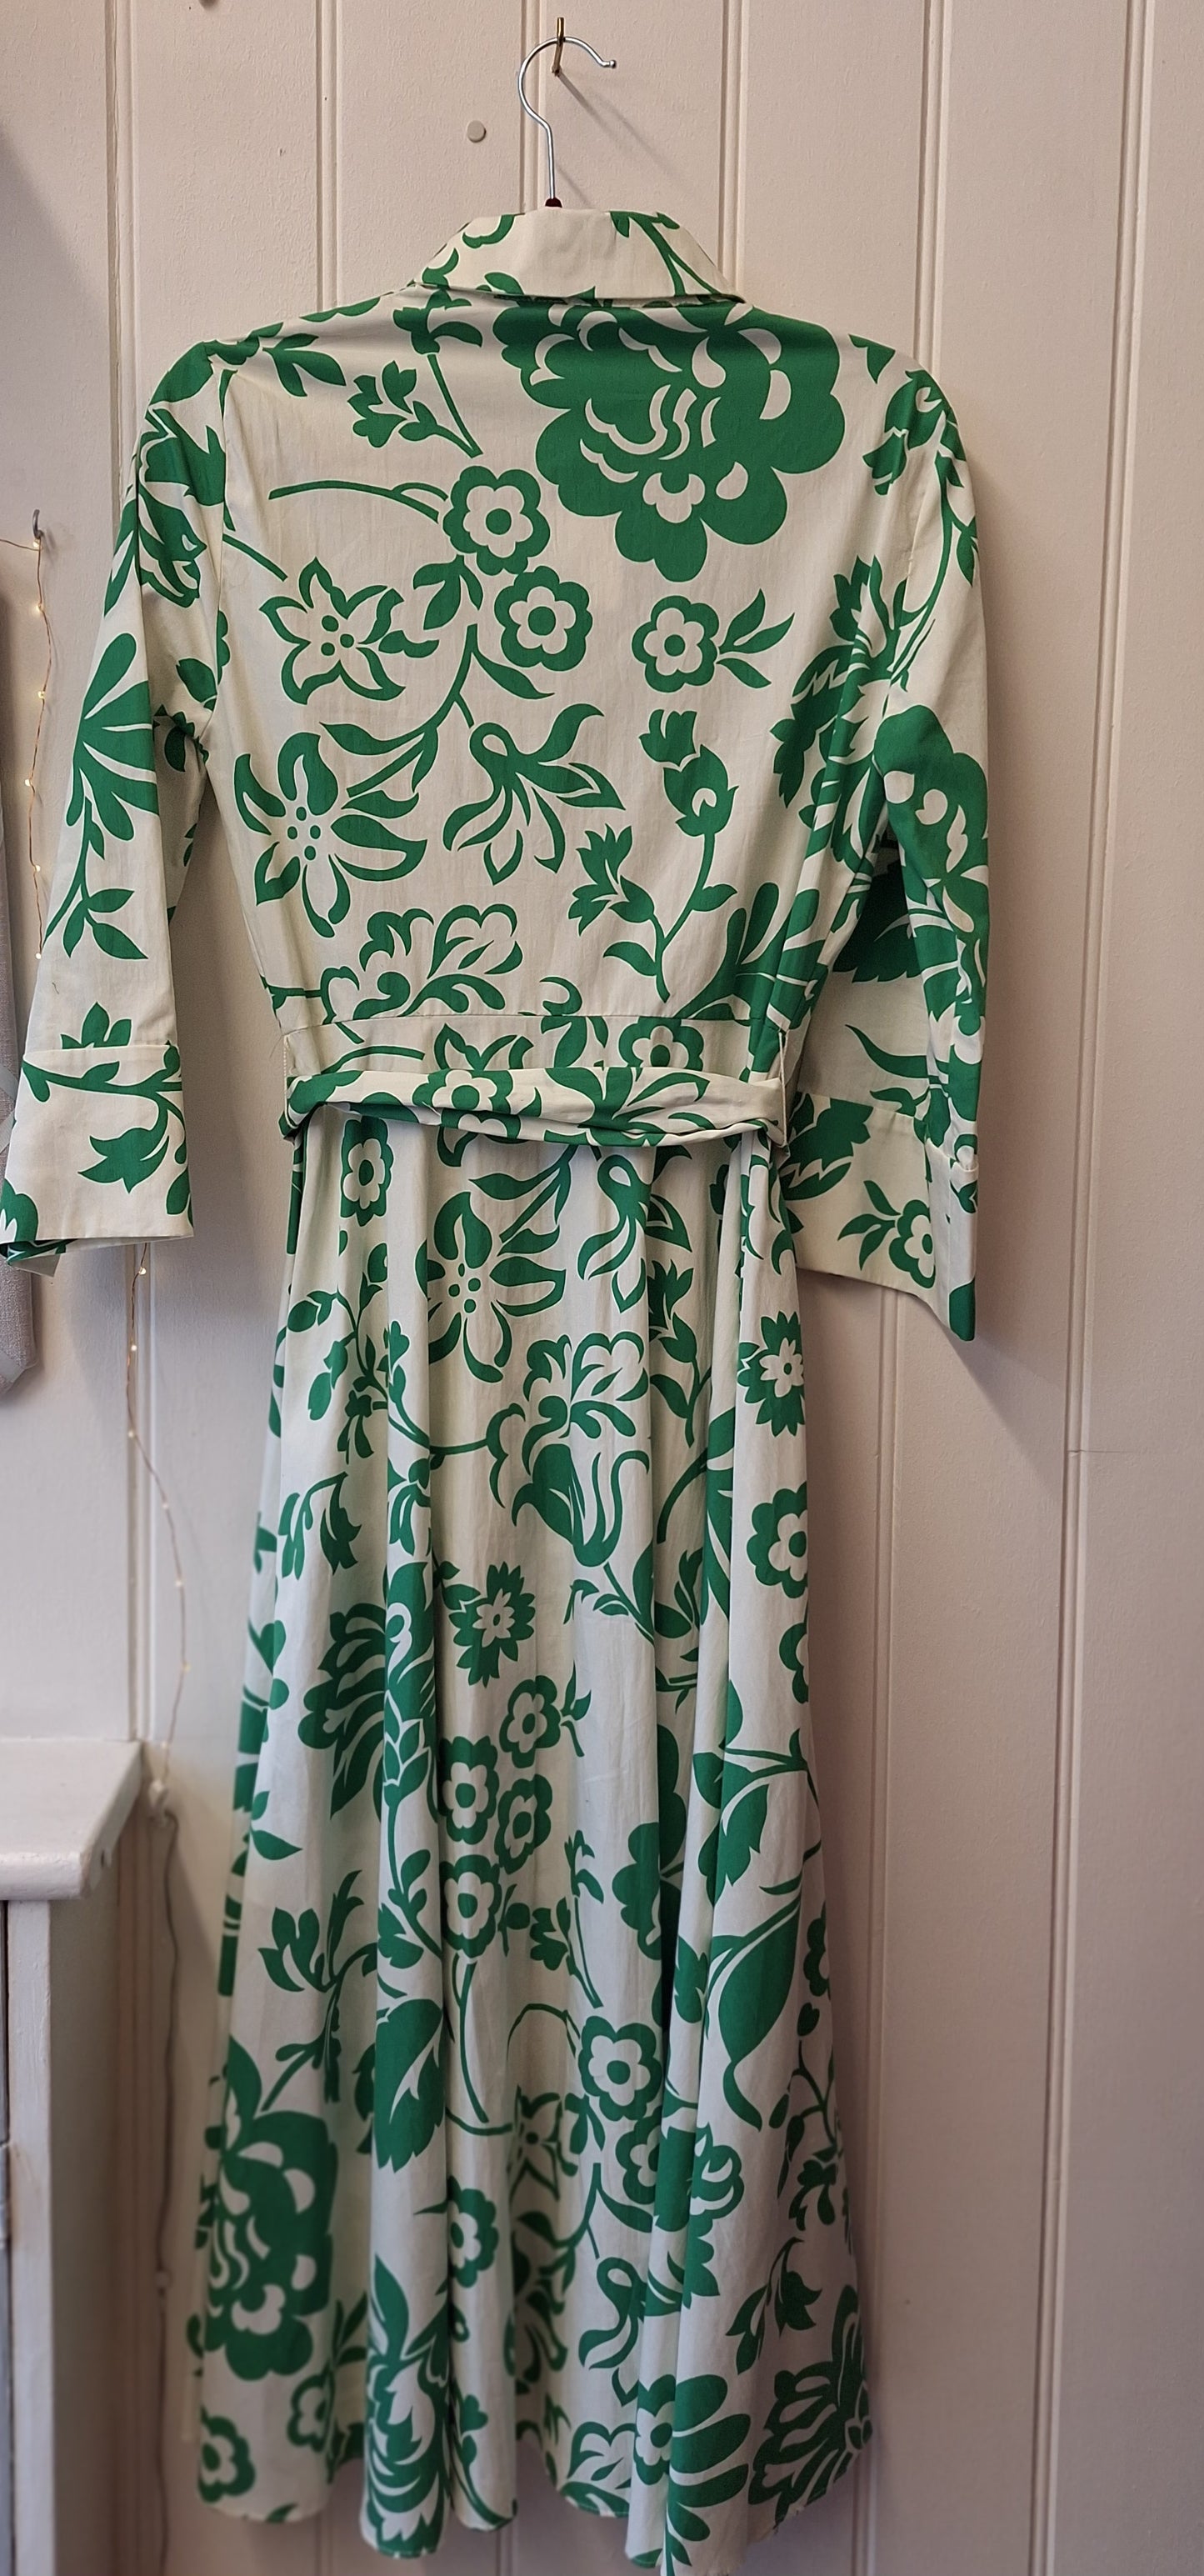 ZARA white and green print dress S